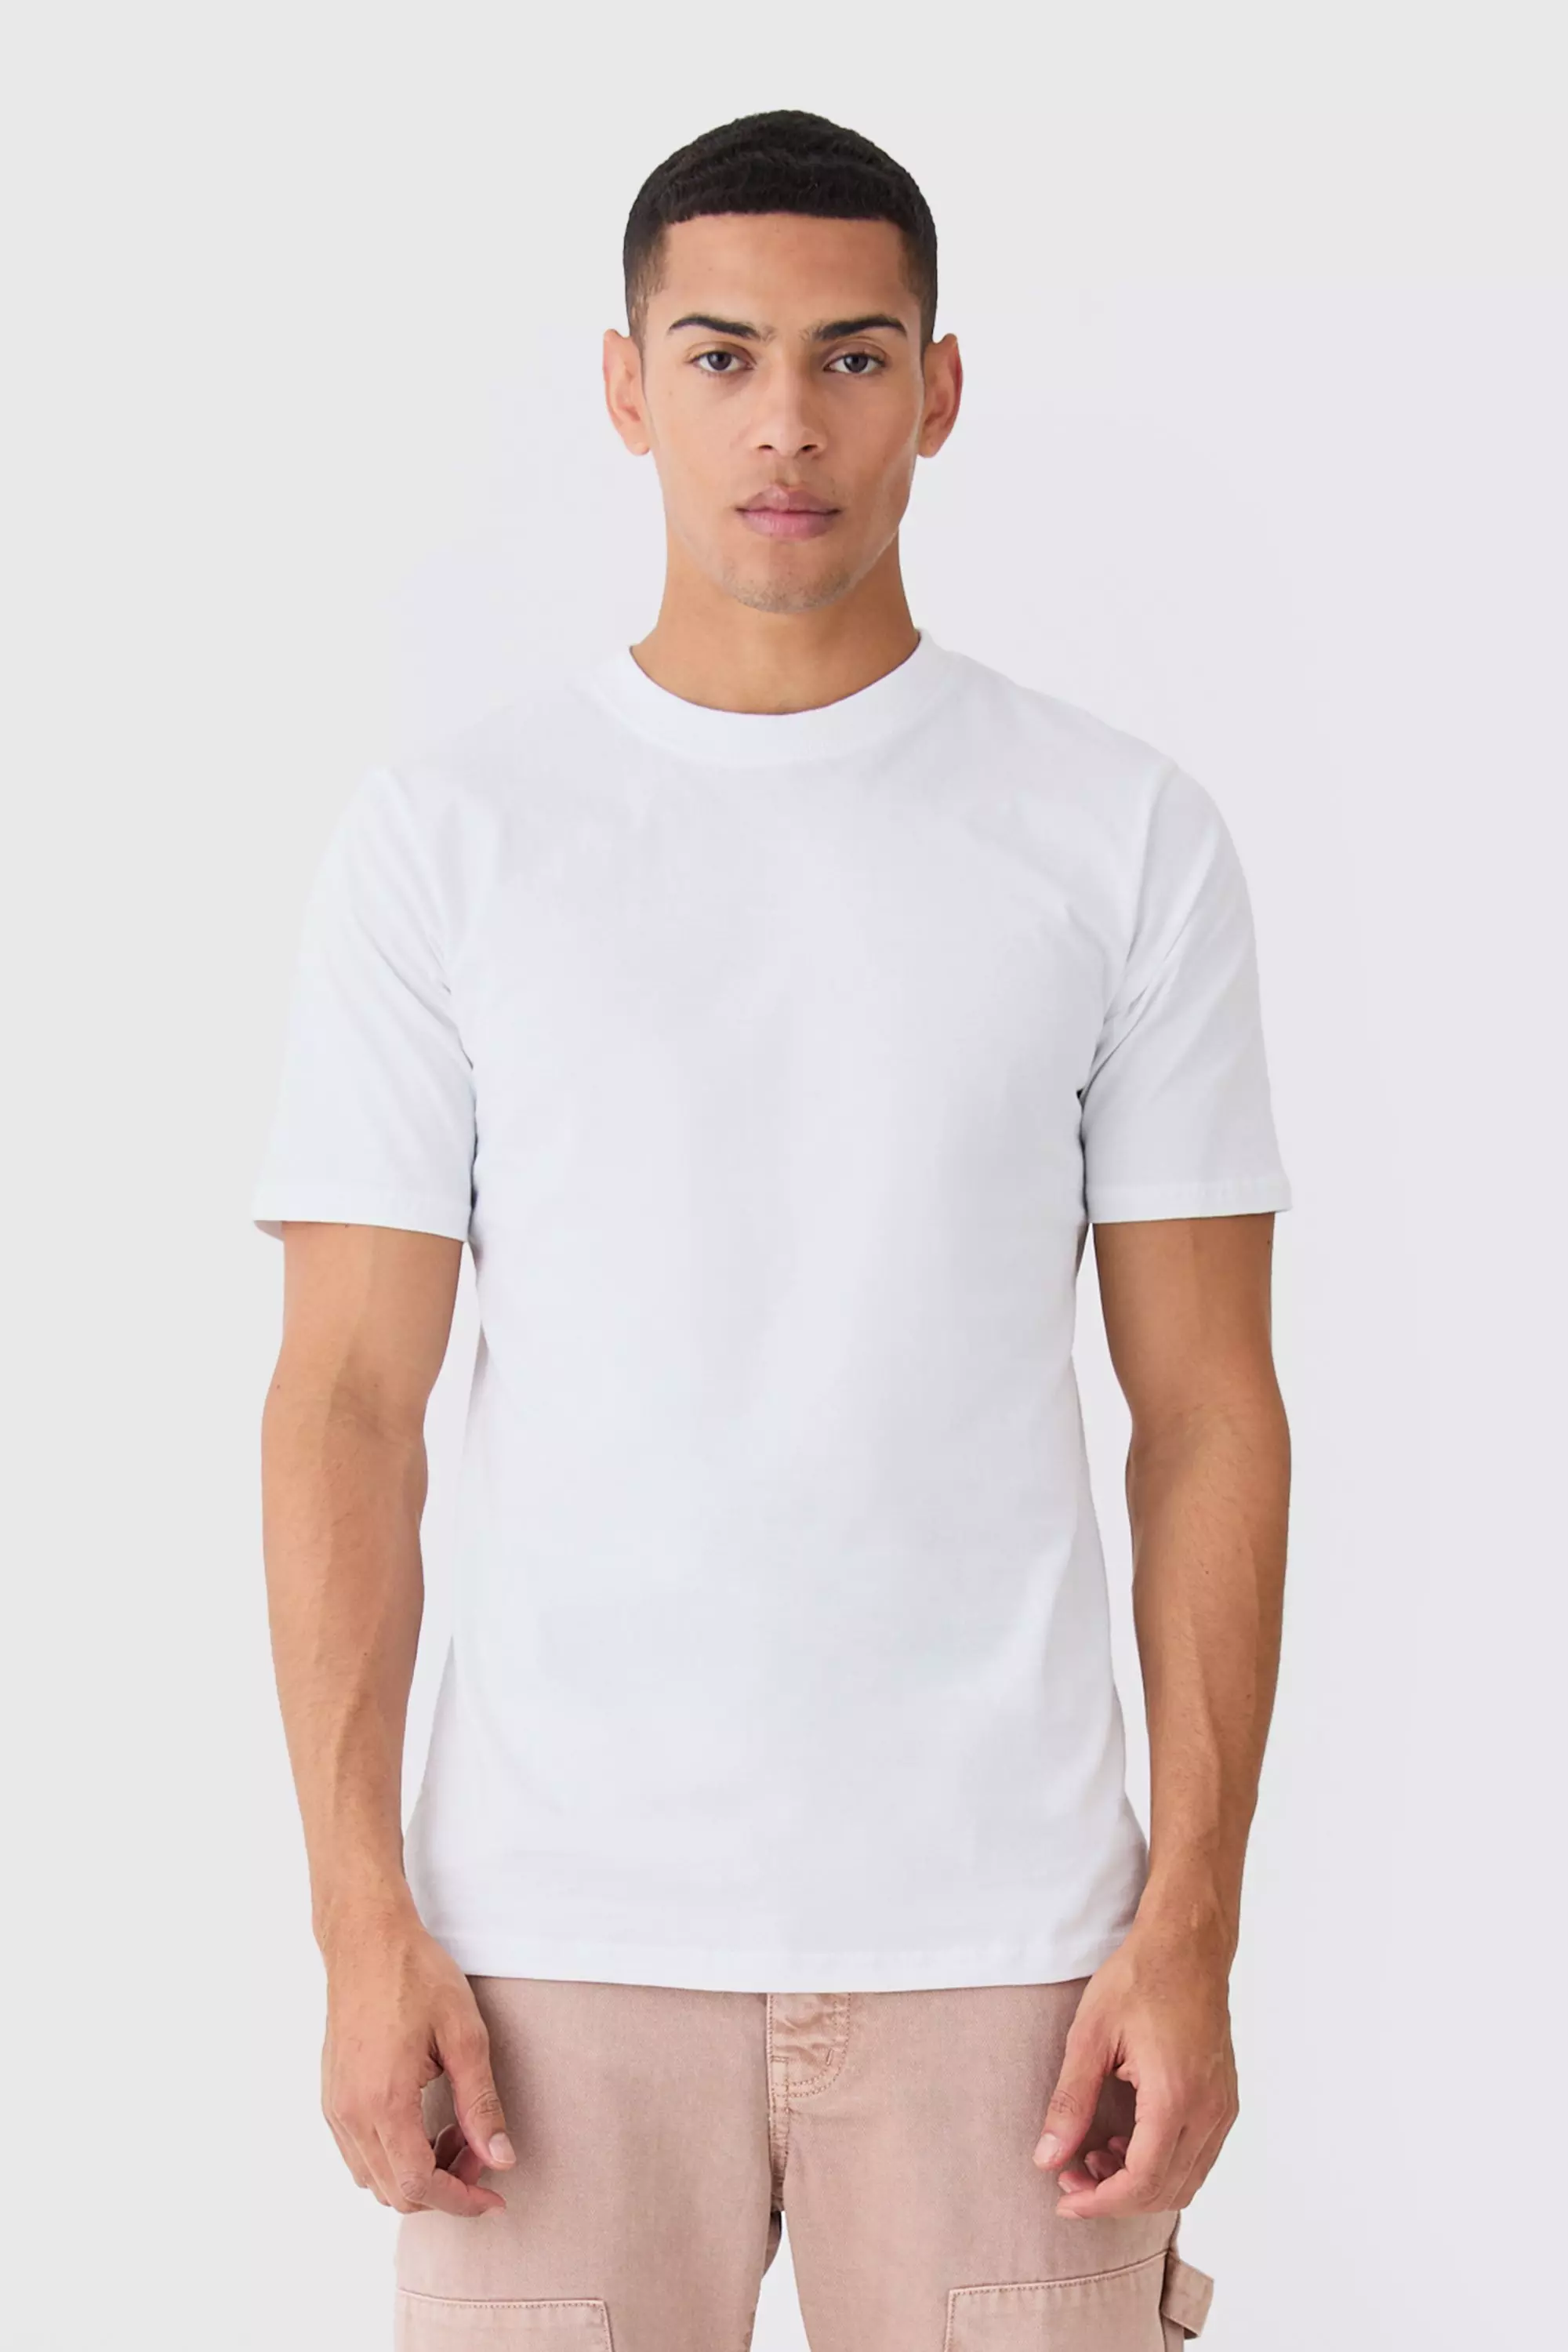 Basic Crew Neck T-shirt White